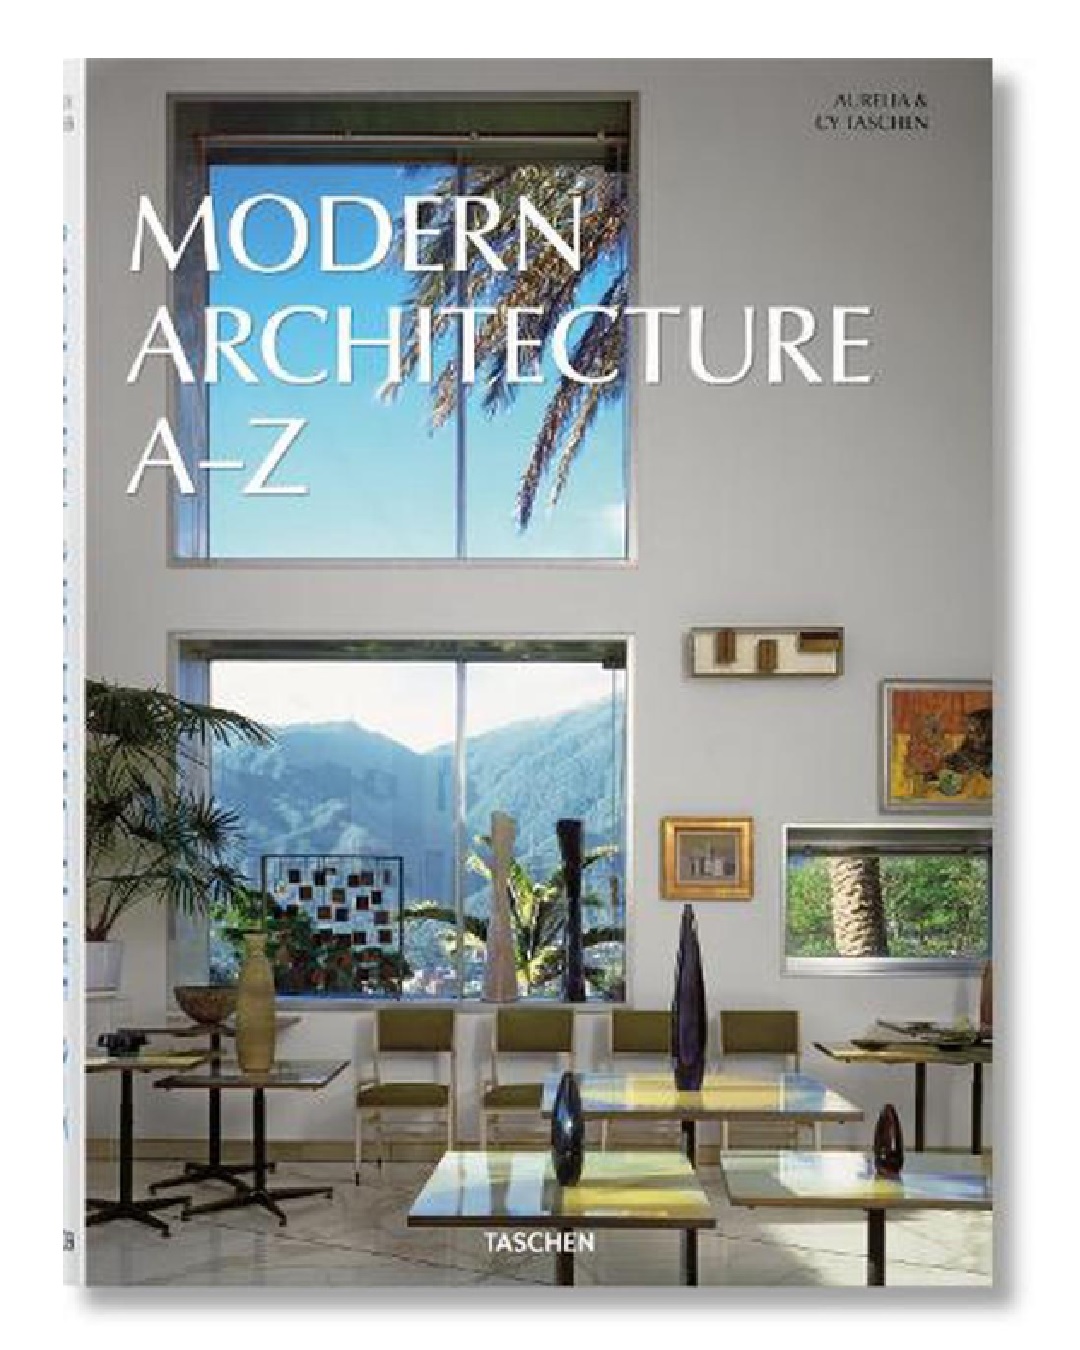 Modern architecture A-Z